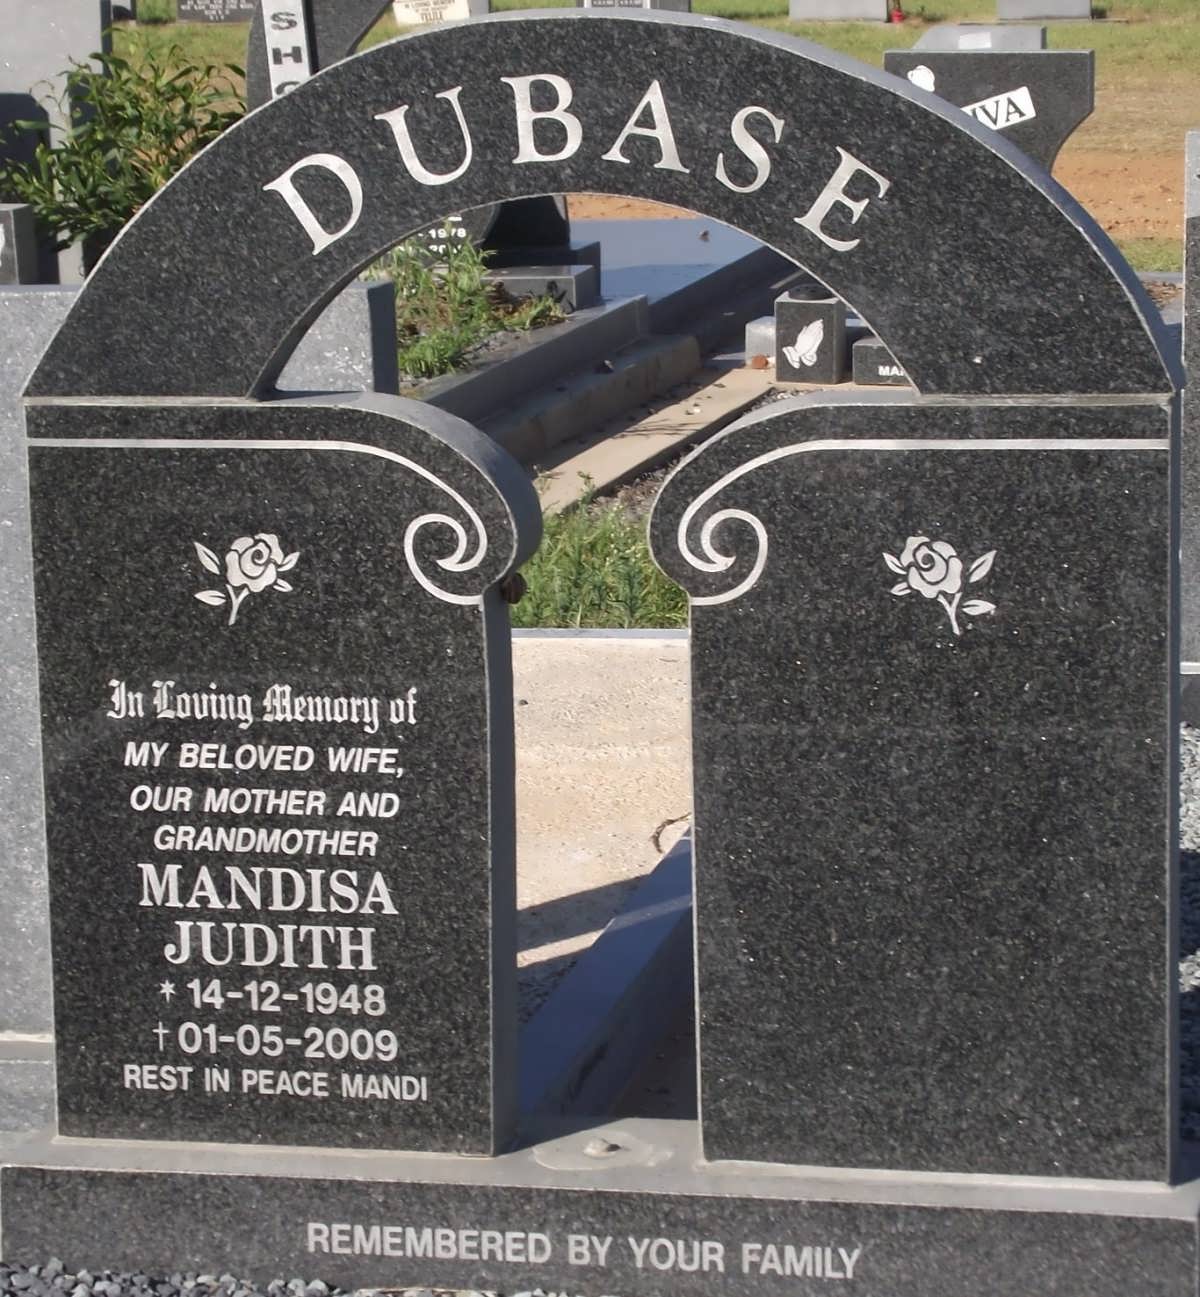 DUBASE Mandisa Judith 1948-2009